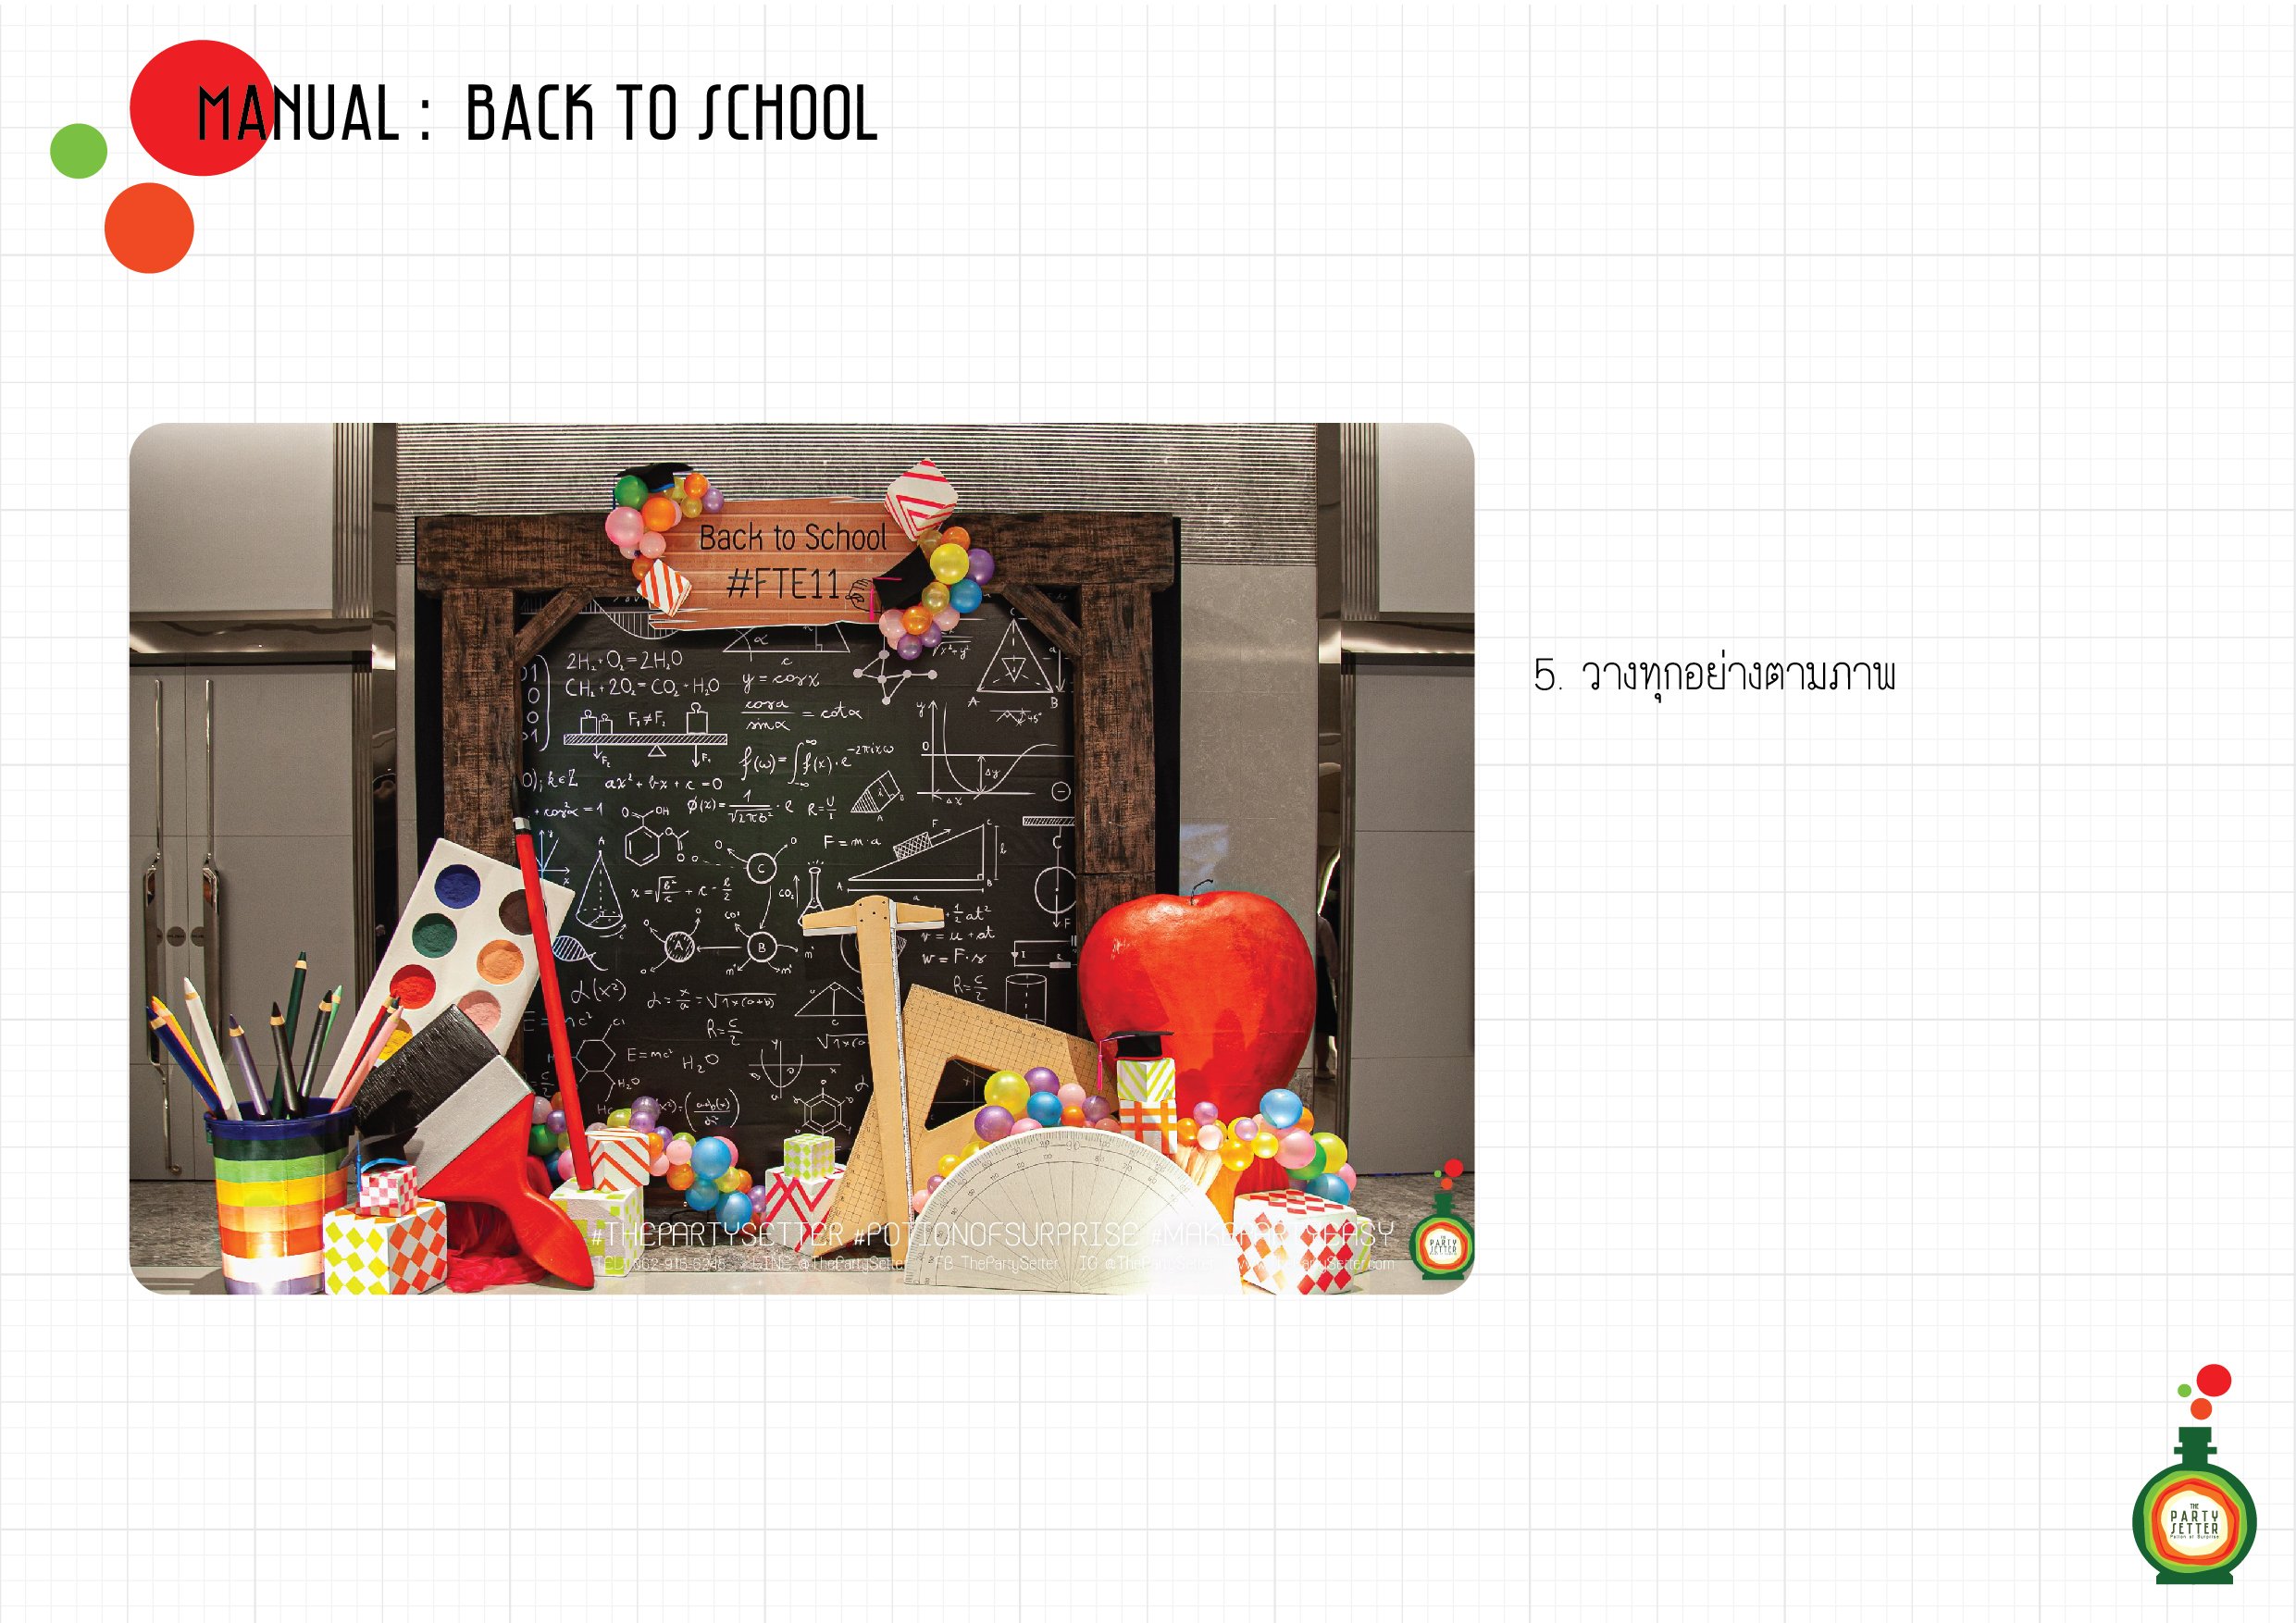 Manual_Back to School-2-05-01.jpg